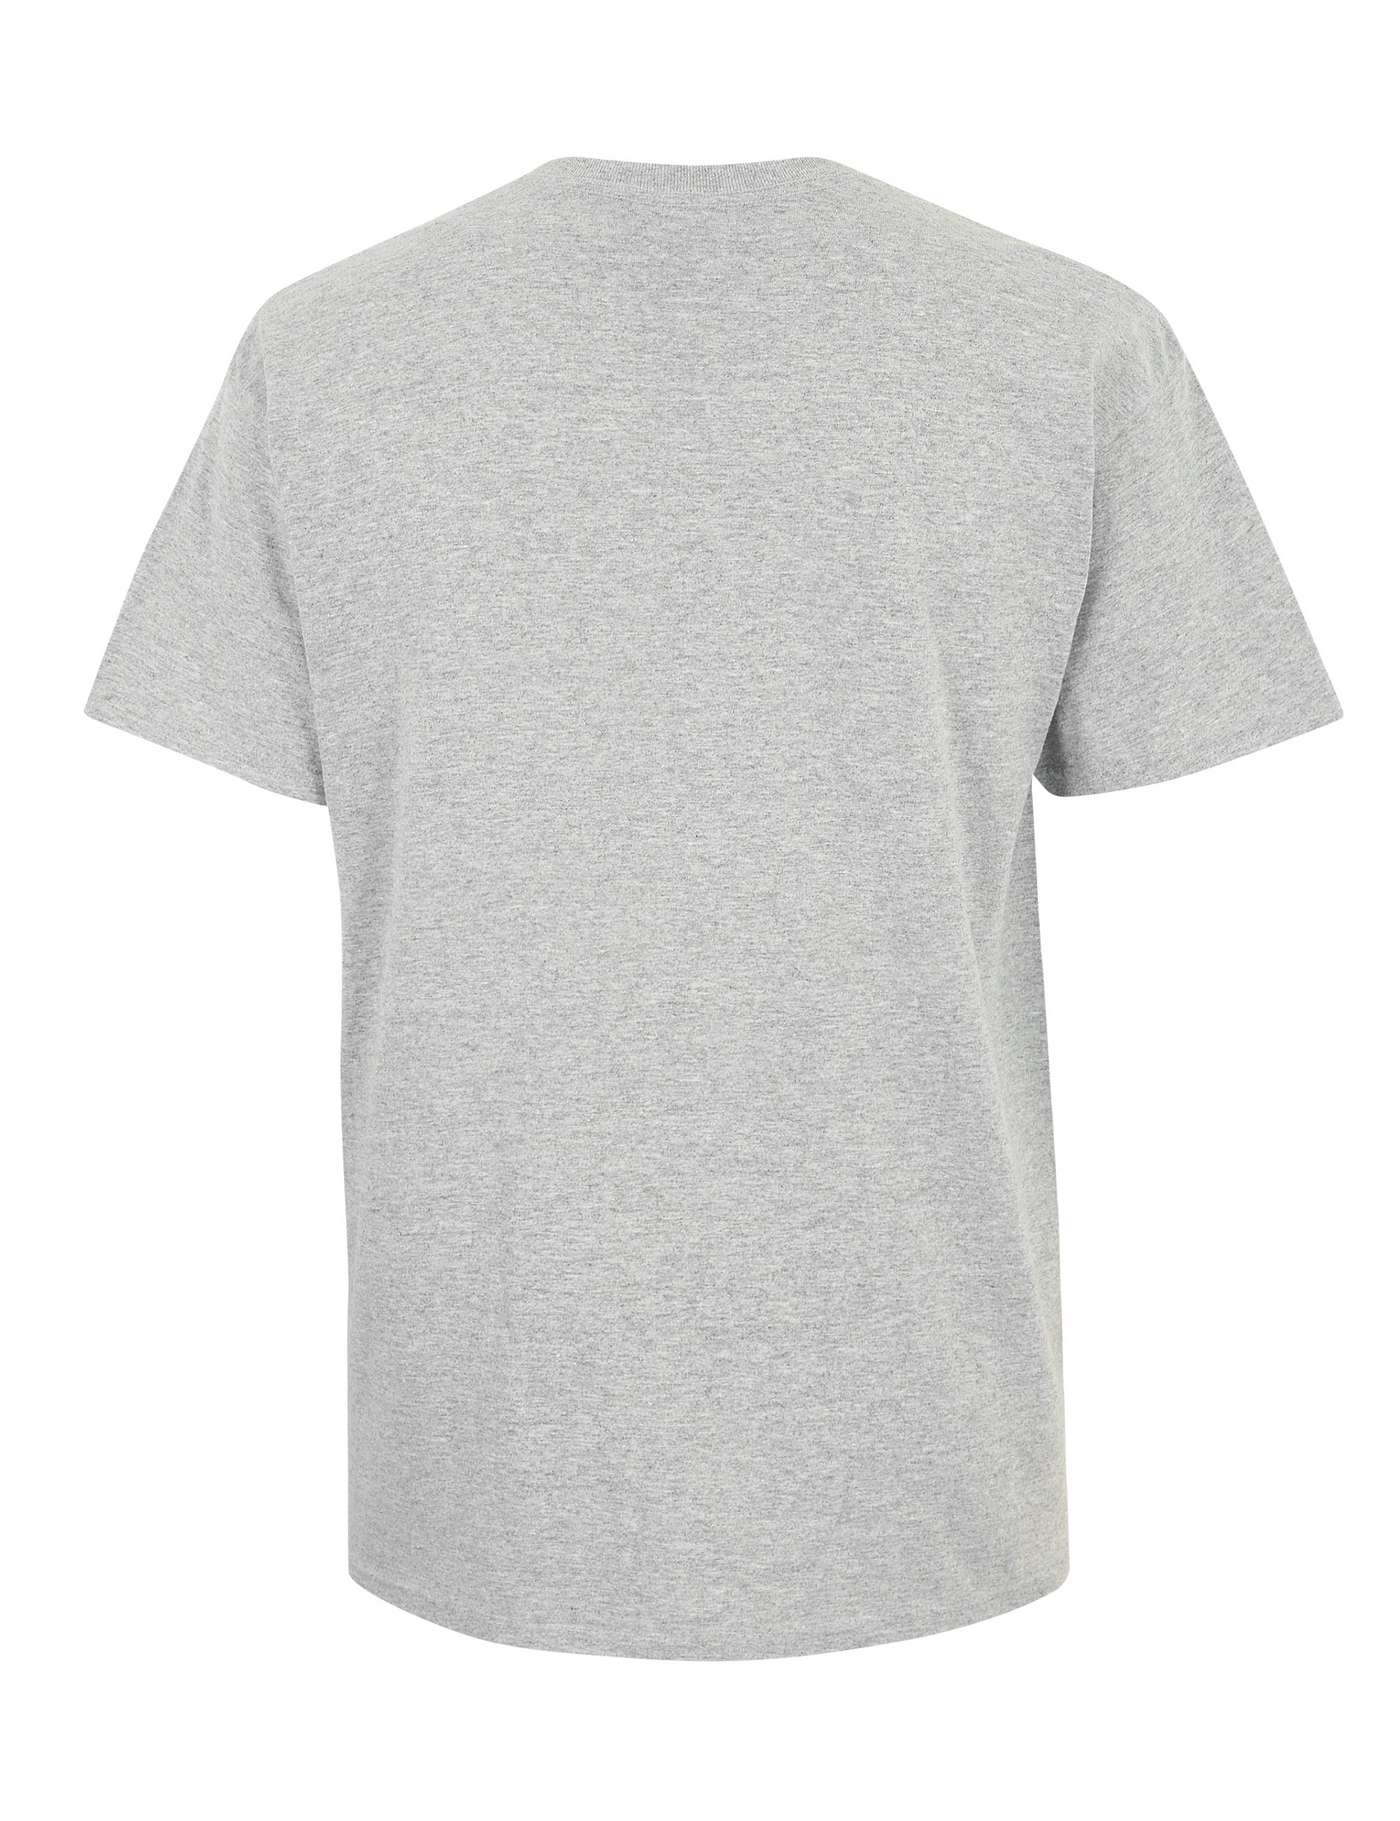 Grey Marl Chicago Logo T-Shirt Image 2